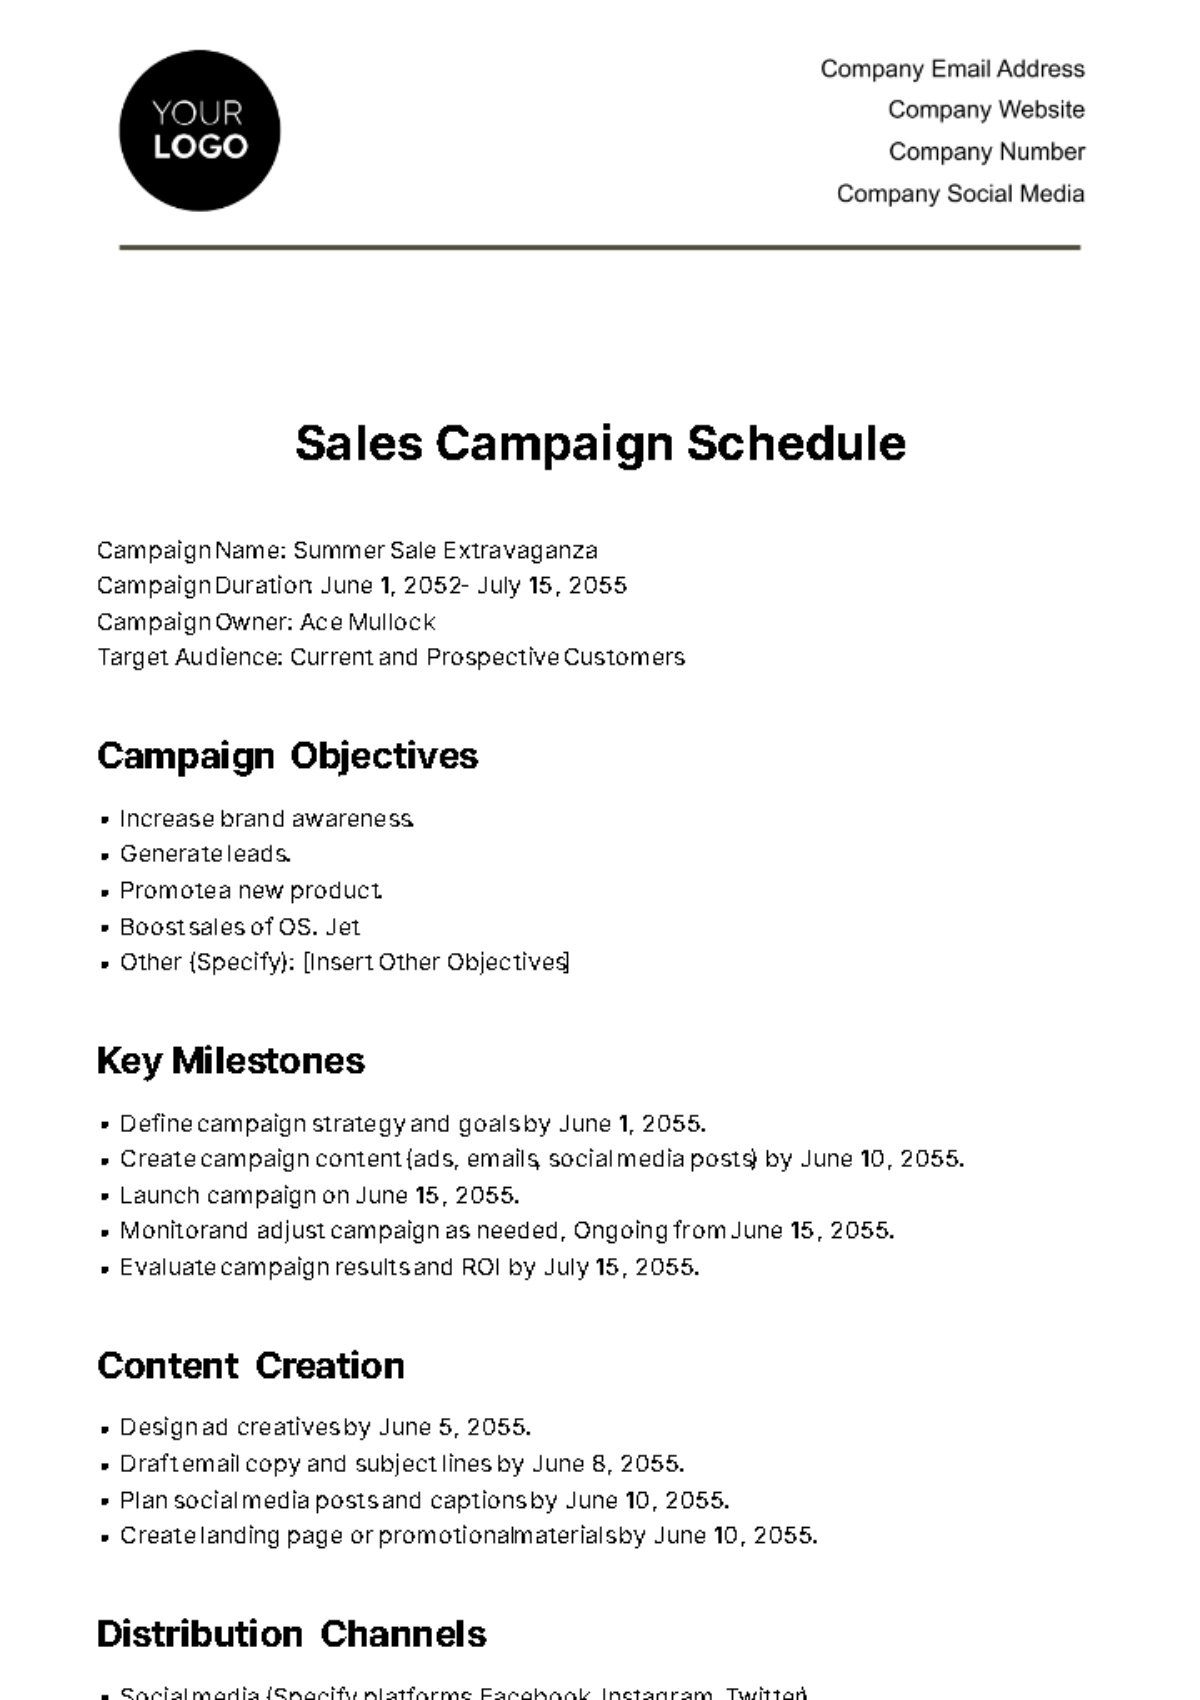 Sales Campaign Schedule Template